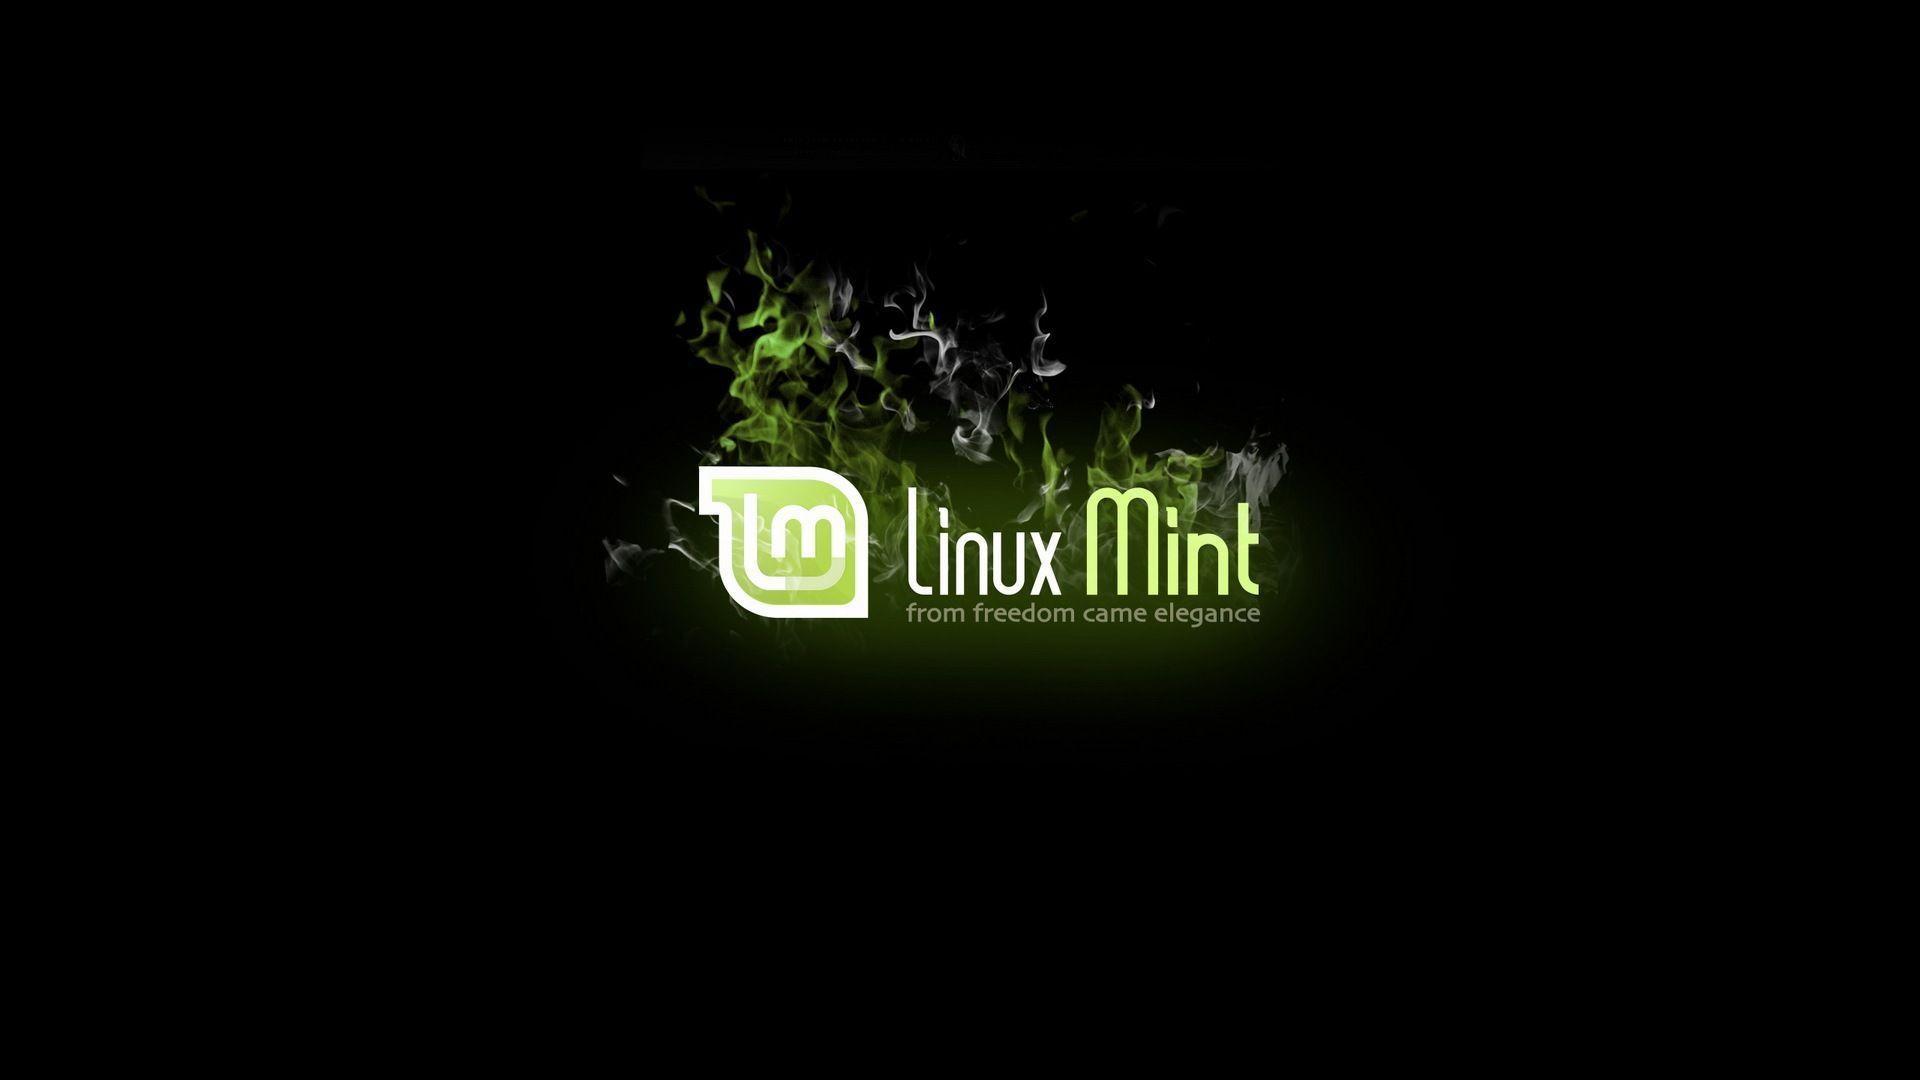 Download Linux Mint Wallpaper 15624 1920x1080 px High Resolution